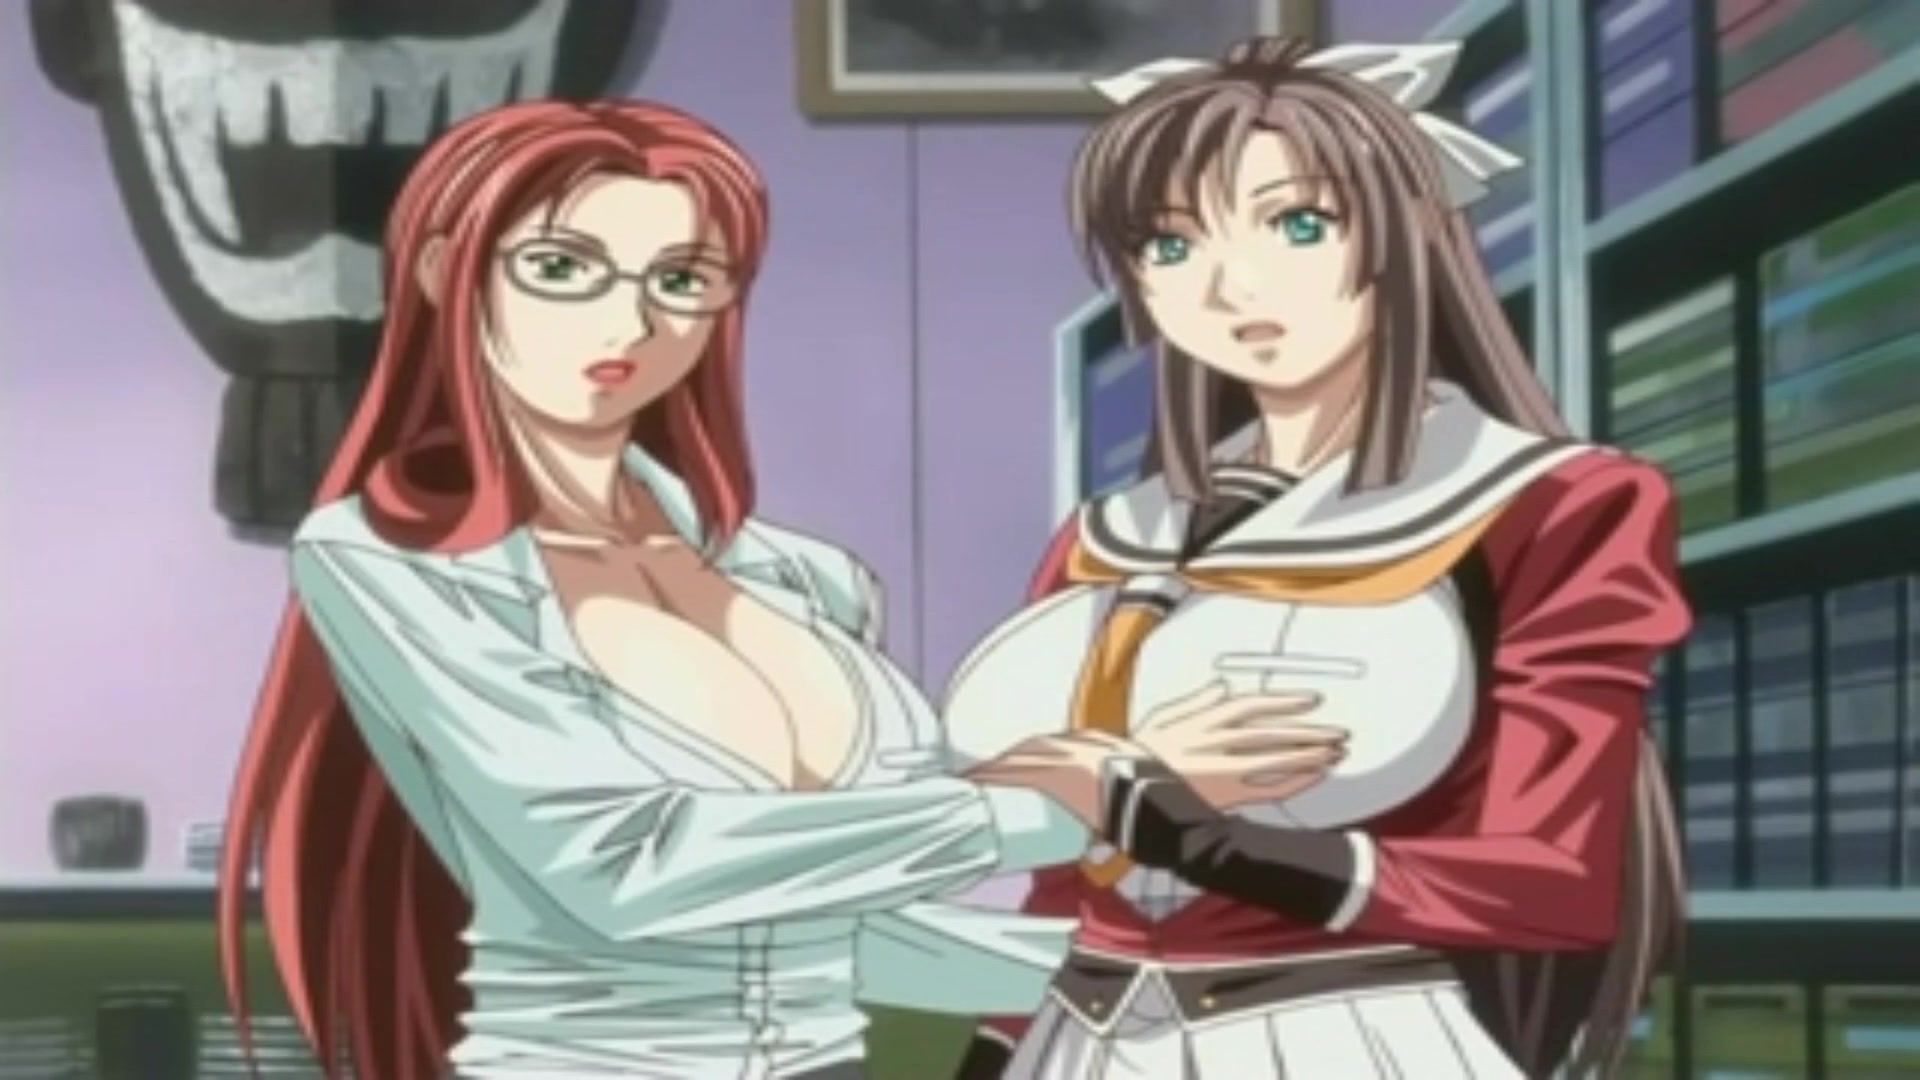 Safari Lesbian Schoolgirl Hentai - Uncensored Anime Love Making Scene Porness